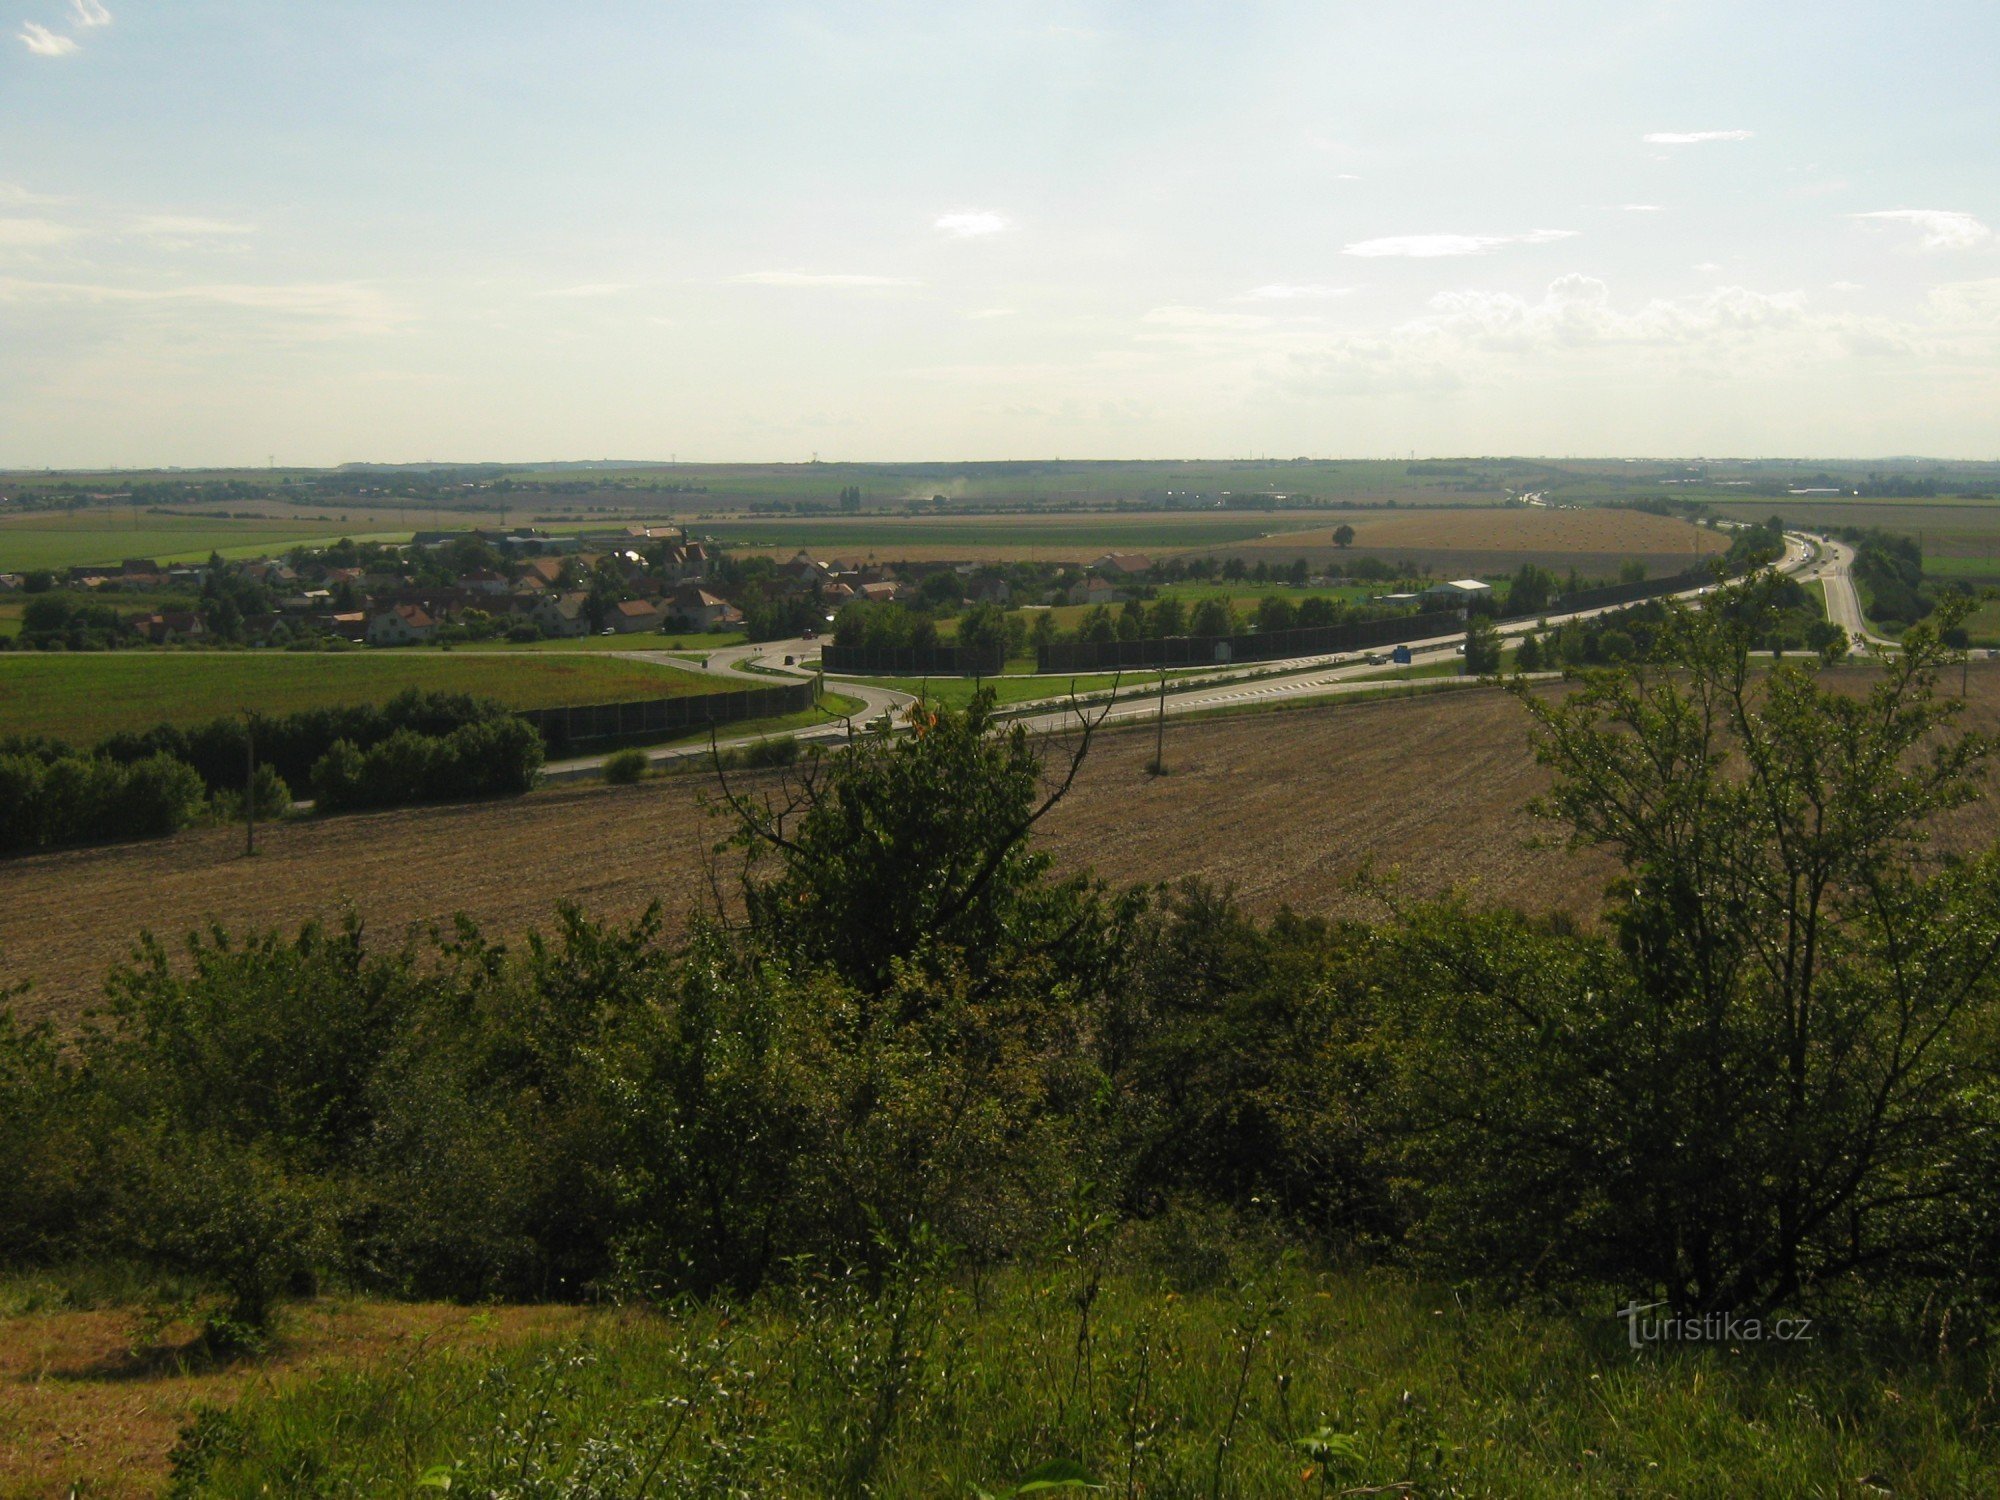 Vista de Českobrodsko, en primer plano de la autopista con salida Bříství